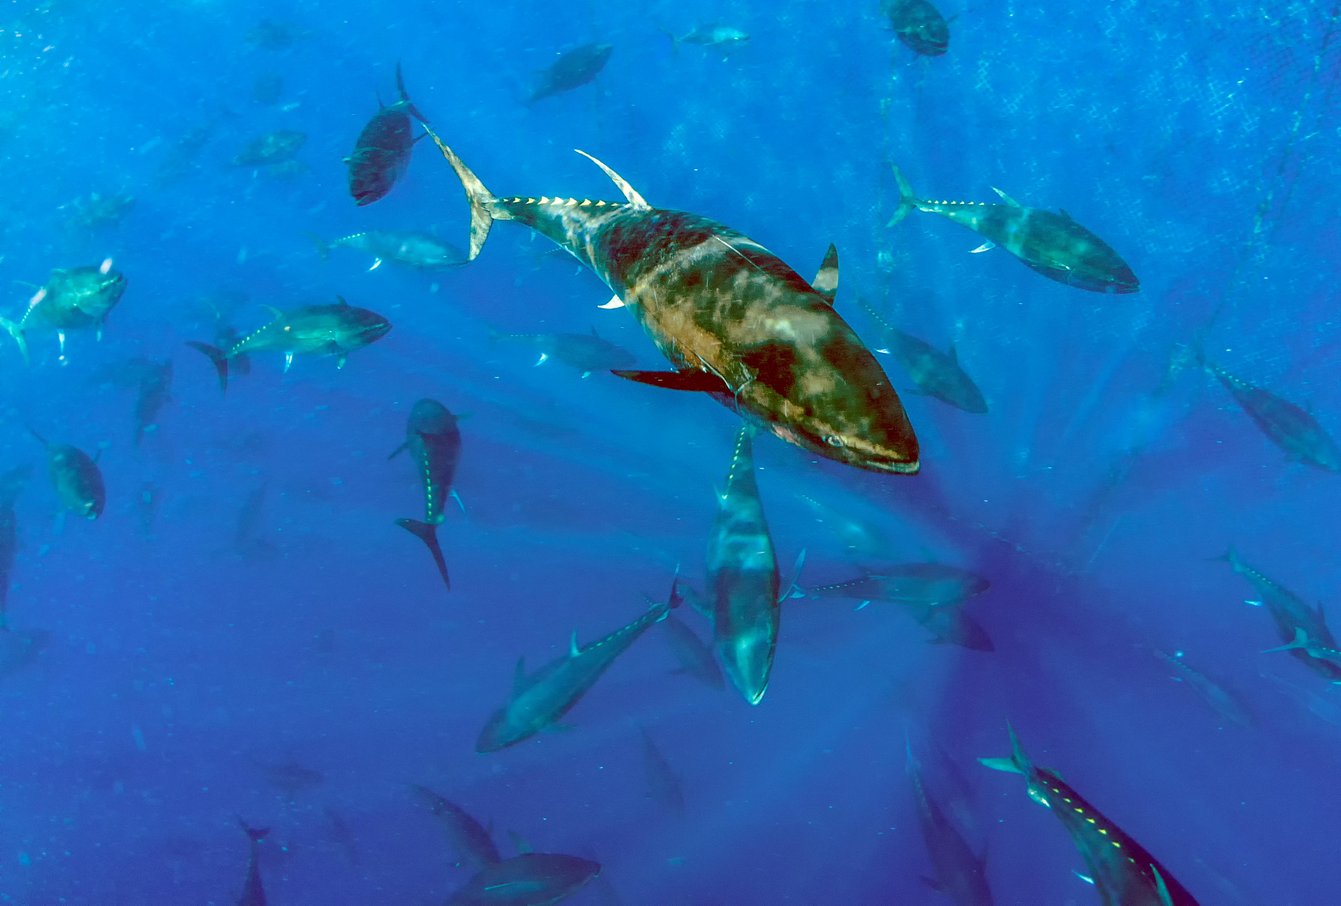 A picture of an Atlantic bluefin tuna